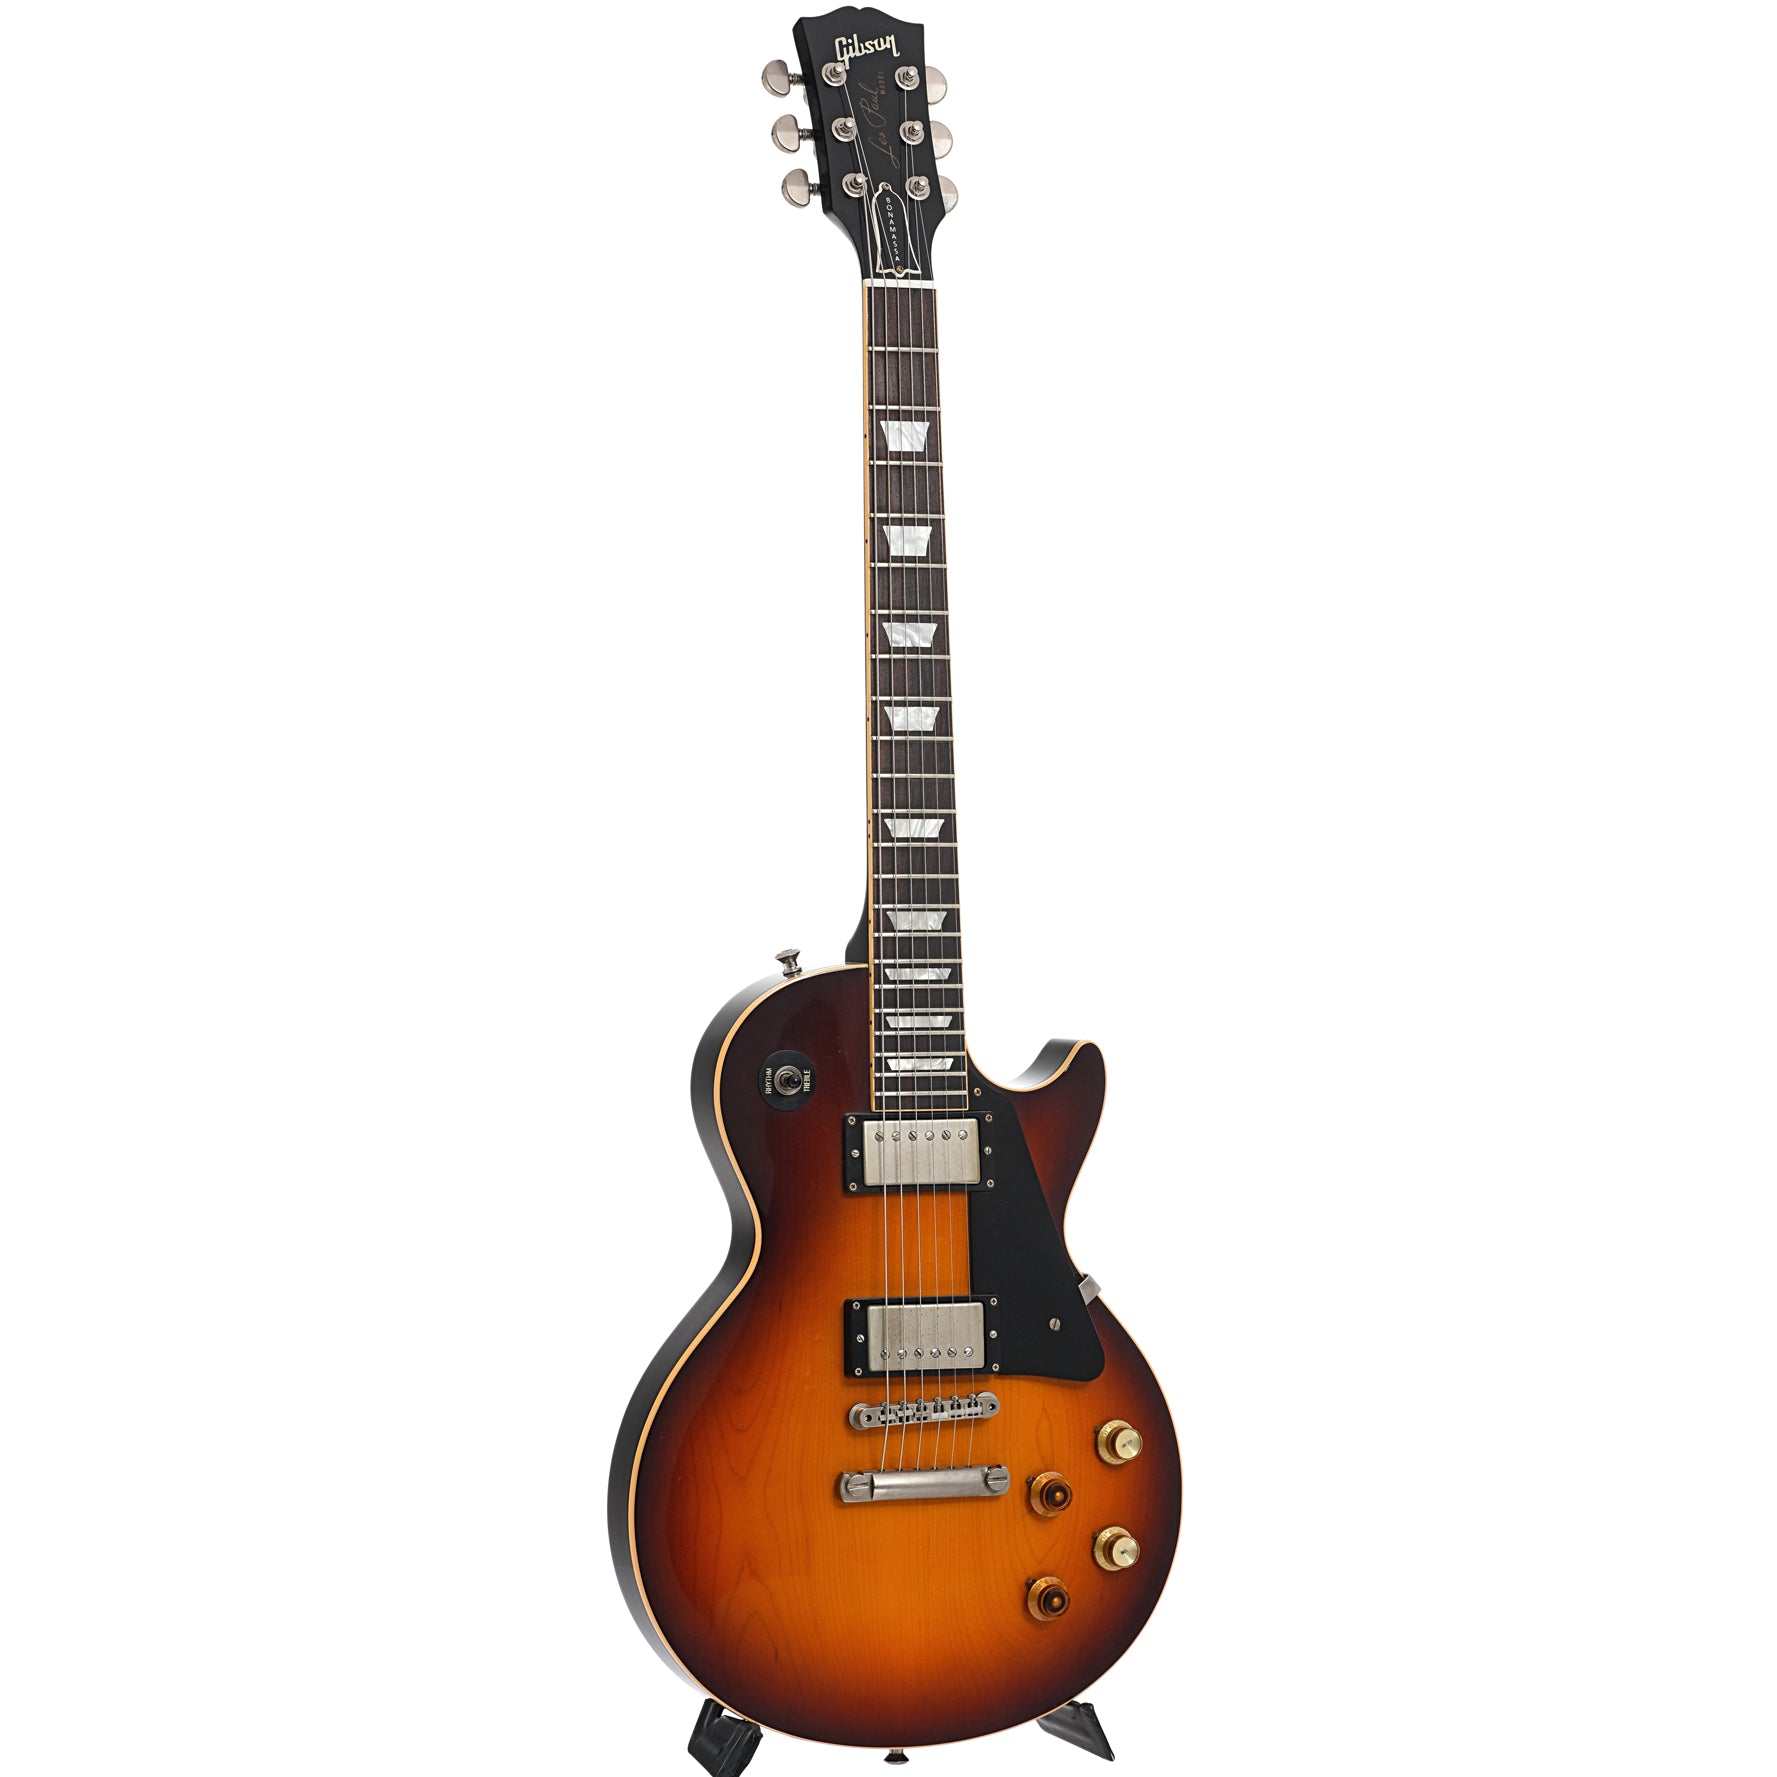 Full front and side of Gibson Joe Bonamassa Les Paul Electric Guitar (2011)